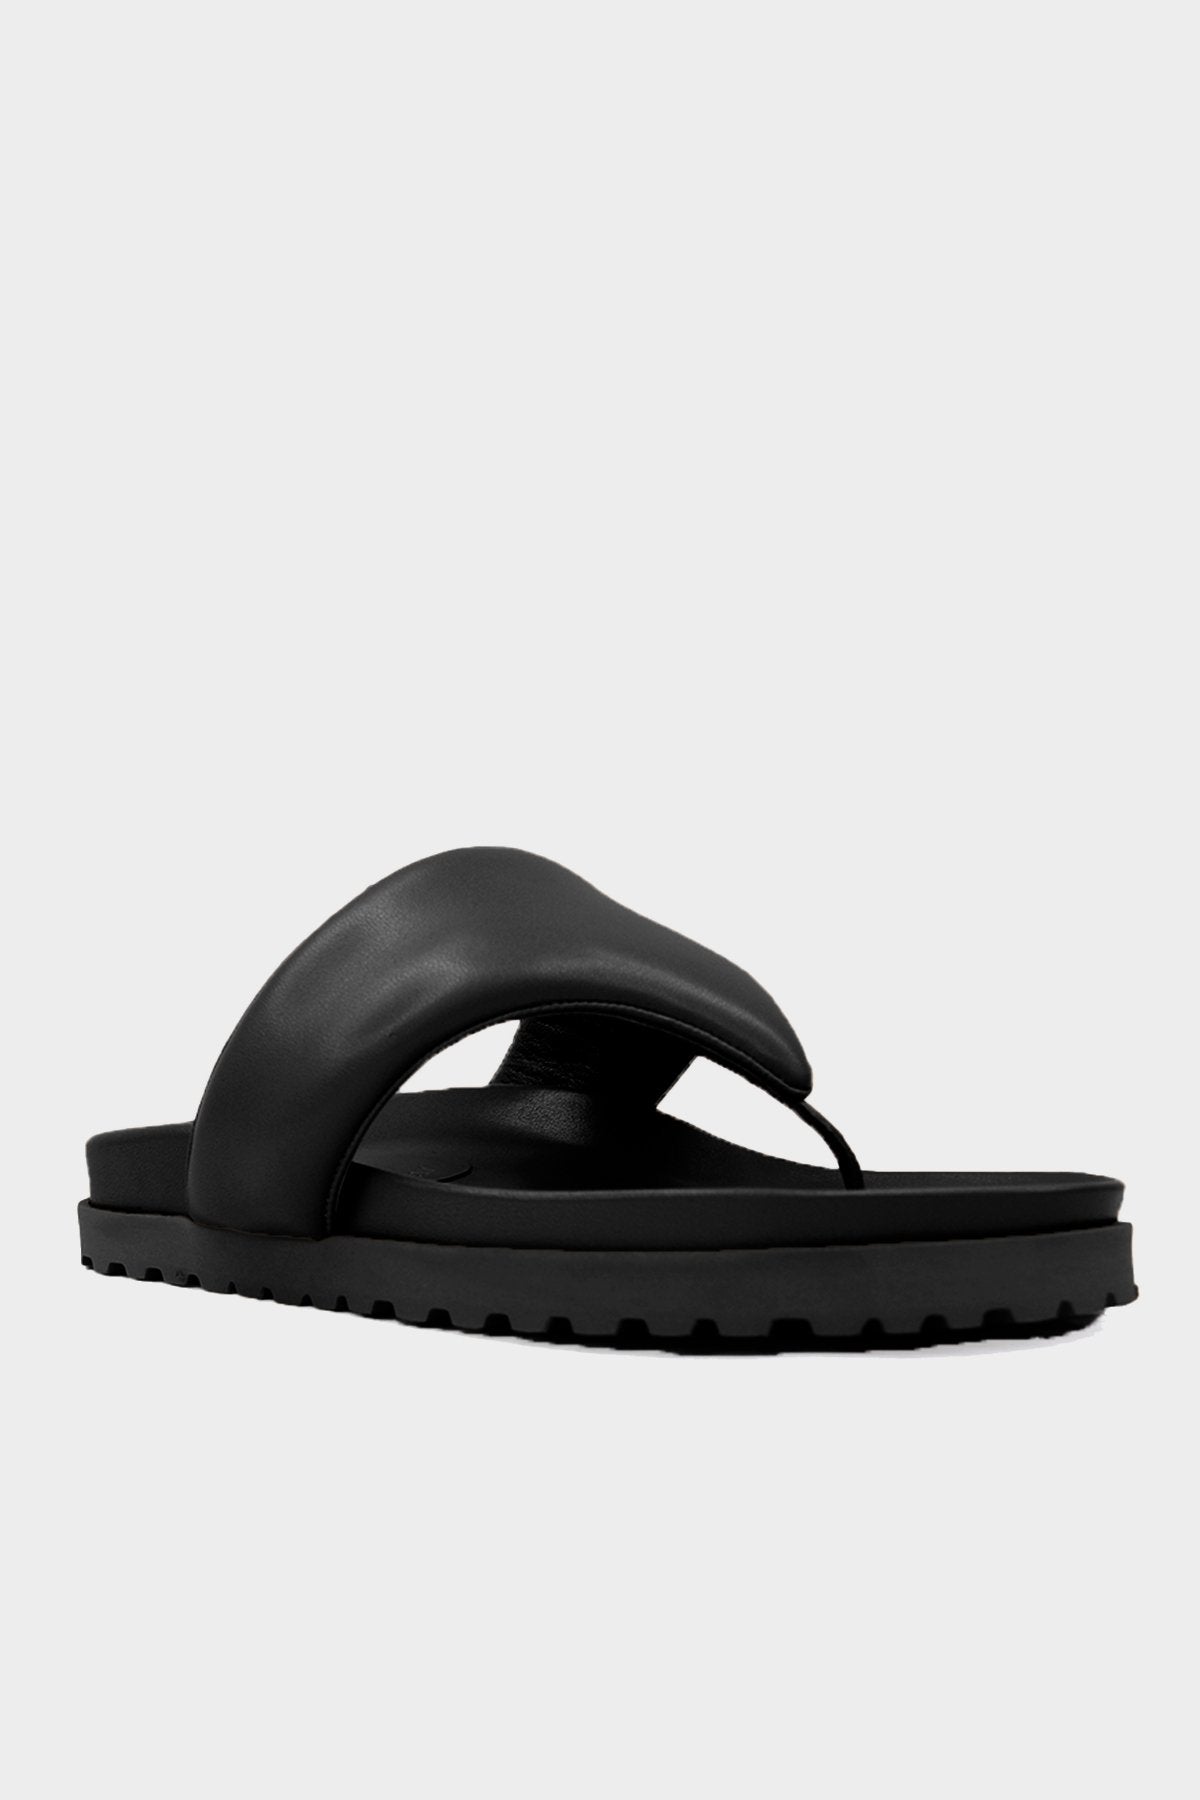 Perni Padded Flip Flop Flat Sandal in Black - shop-olivia.com